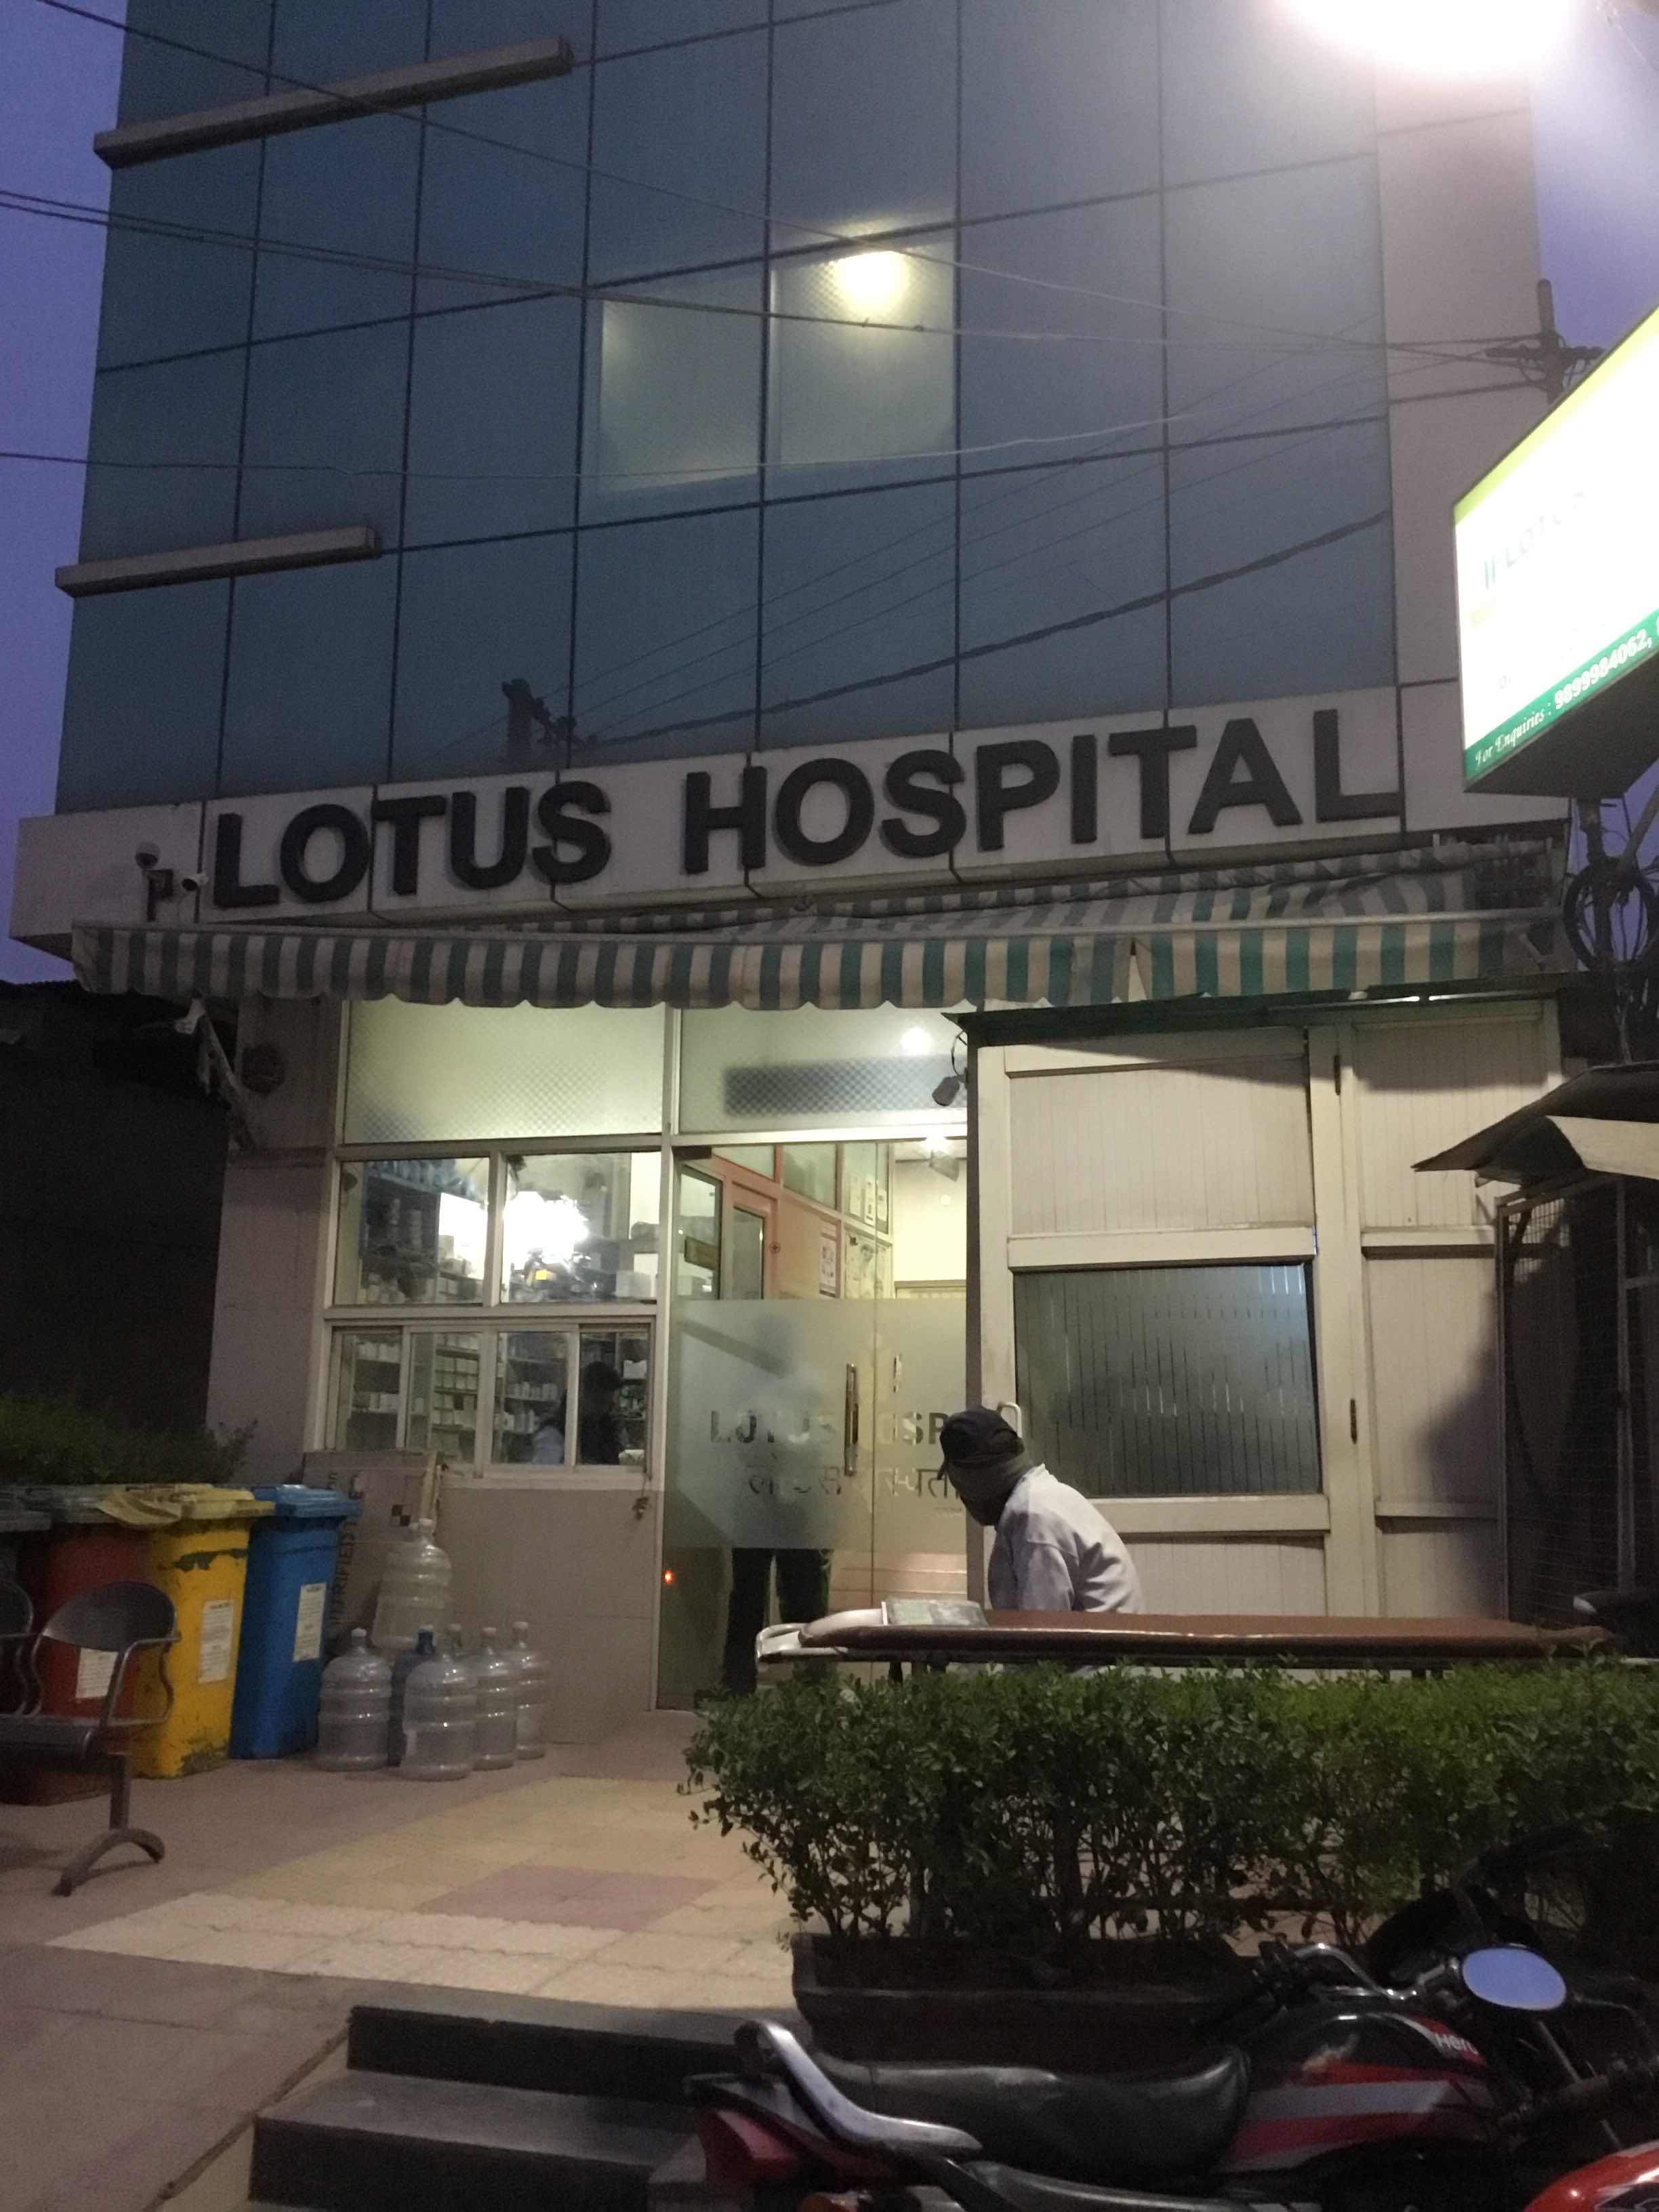 Lotus Hospital|Hospitals|Medical Services